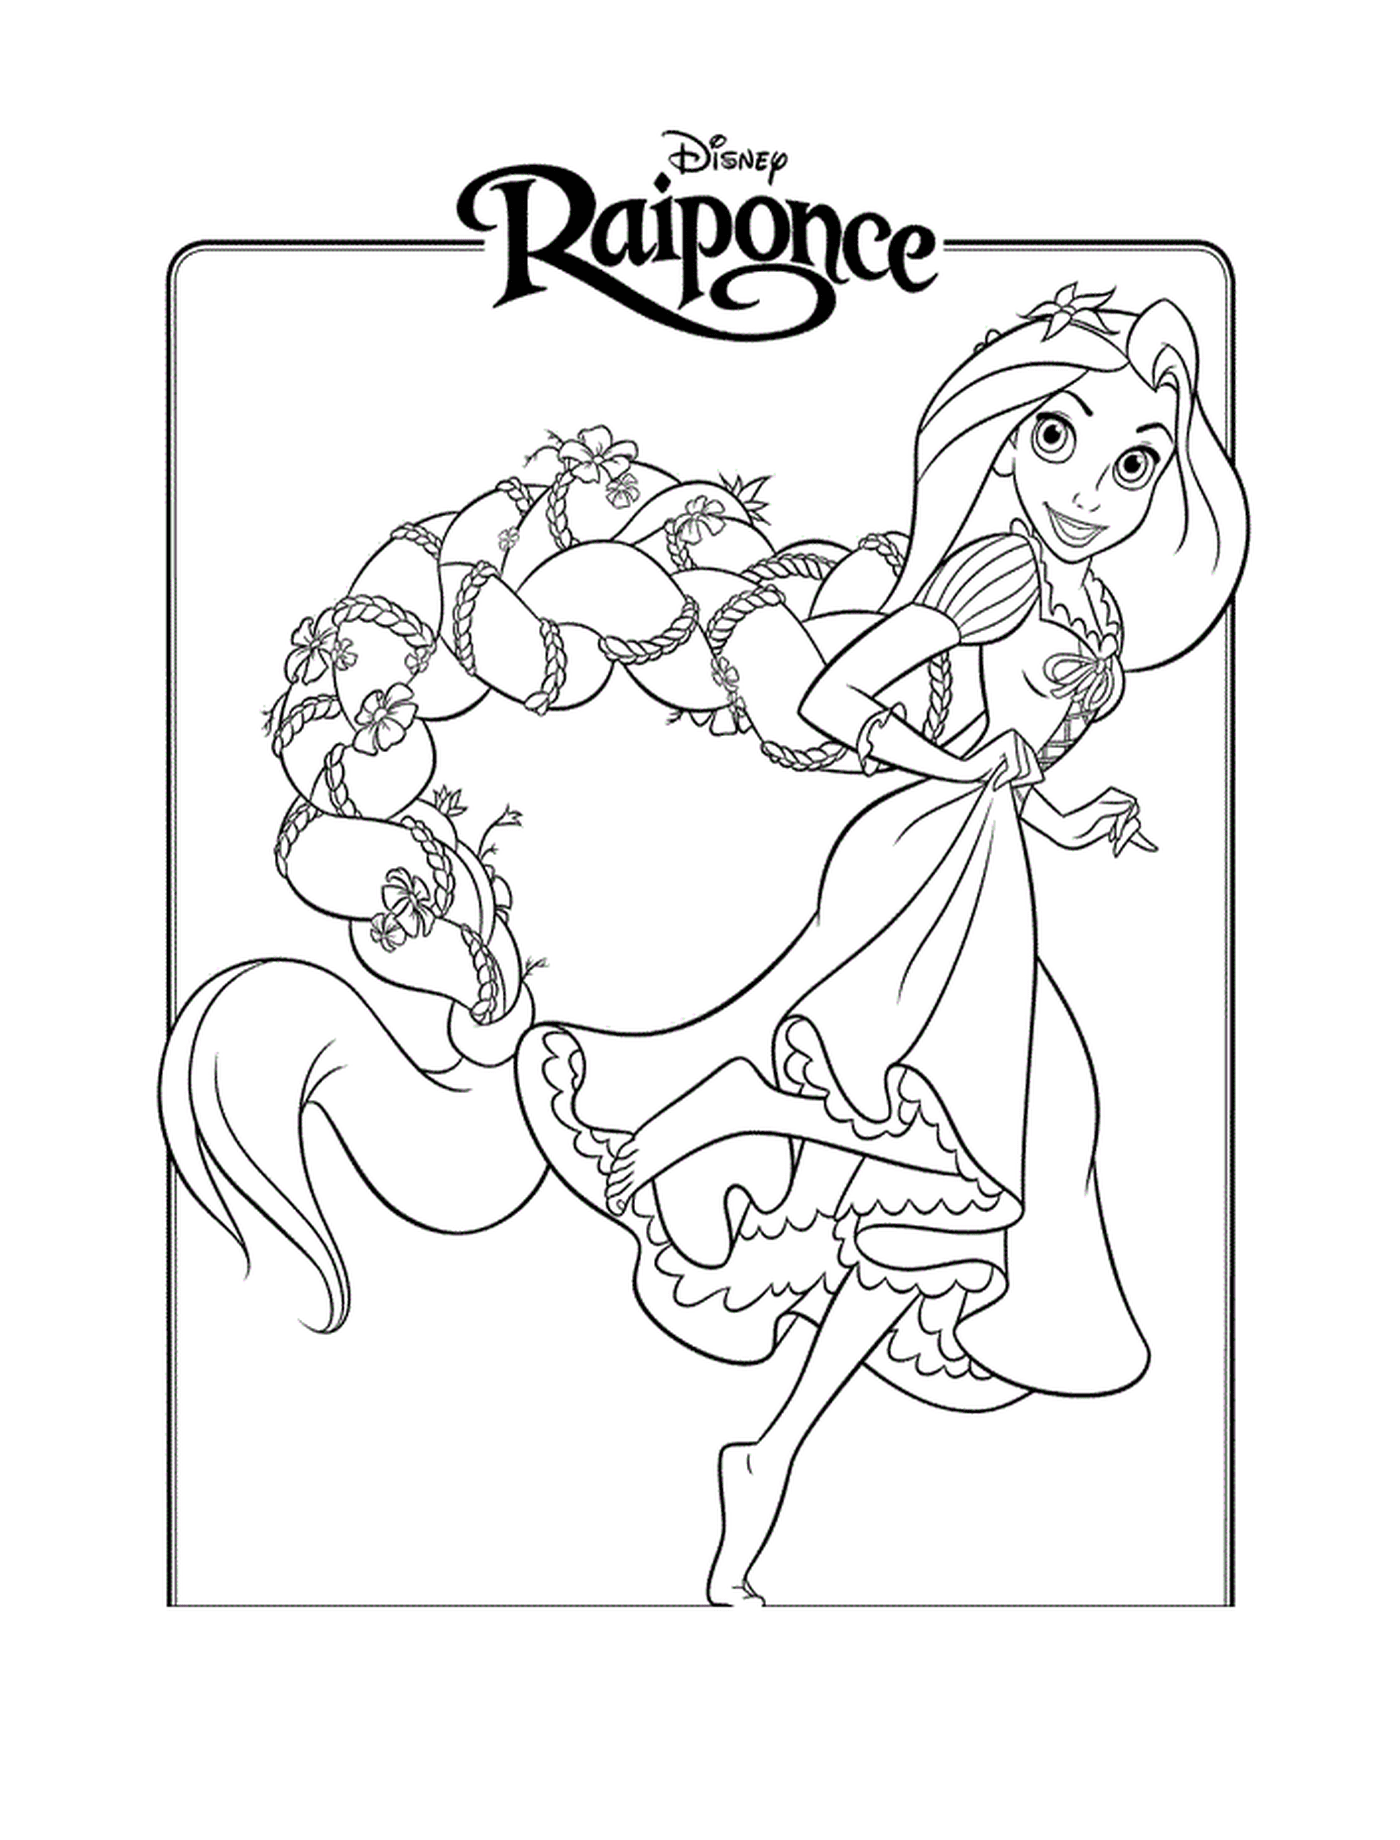  Princess Raiponce, of dazzling beauty 